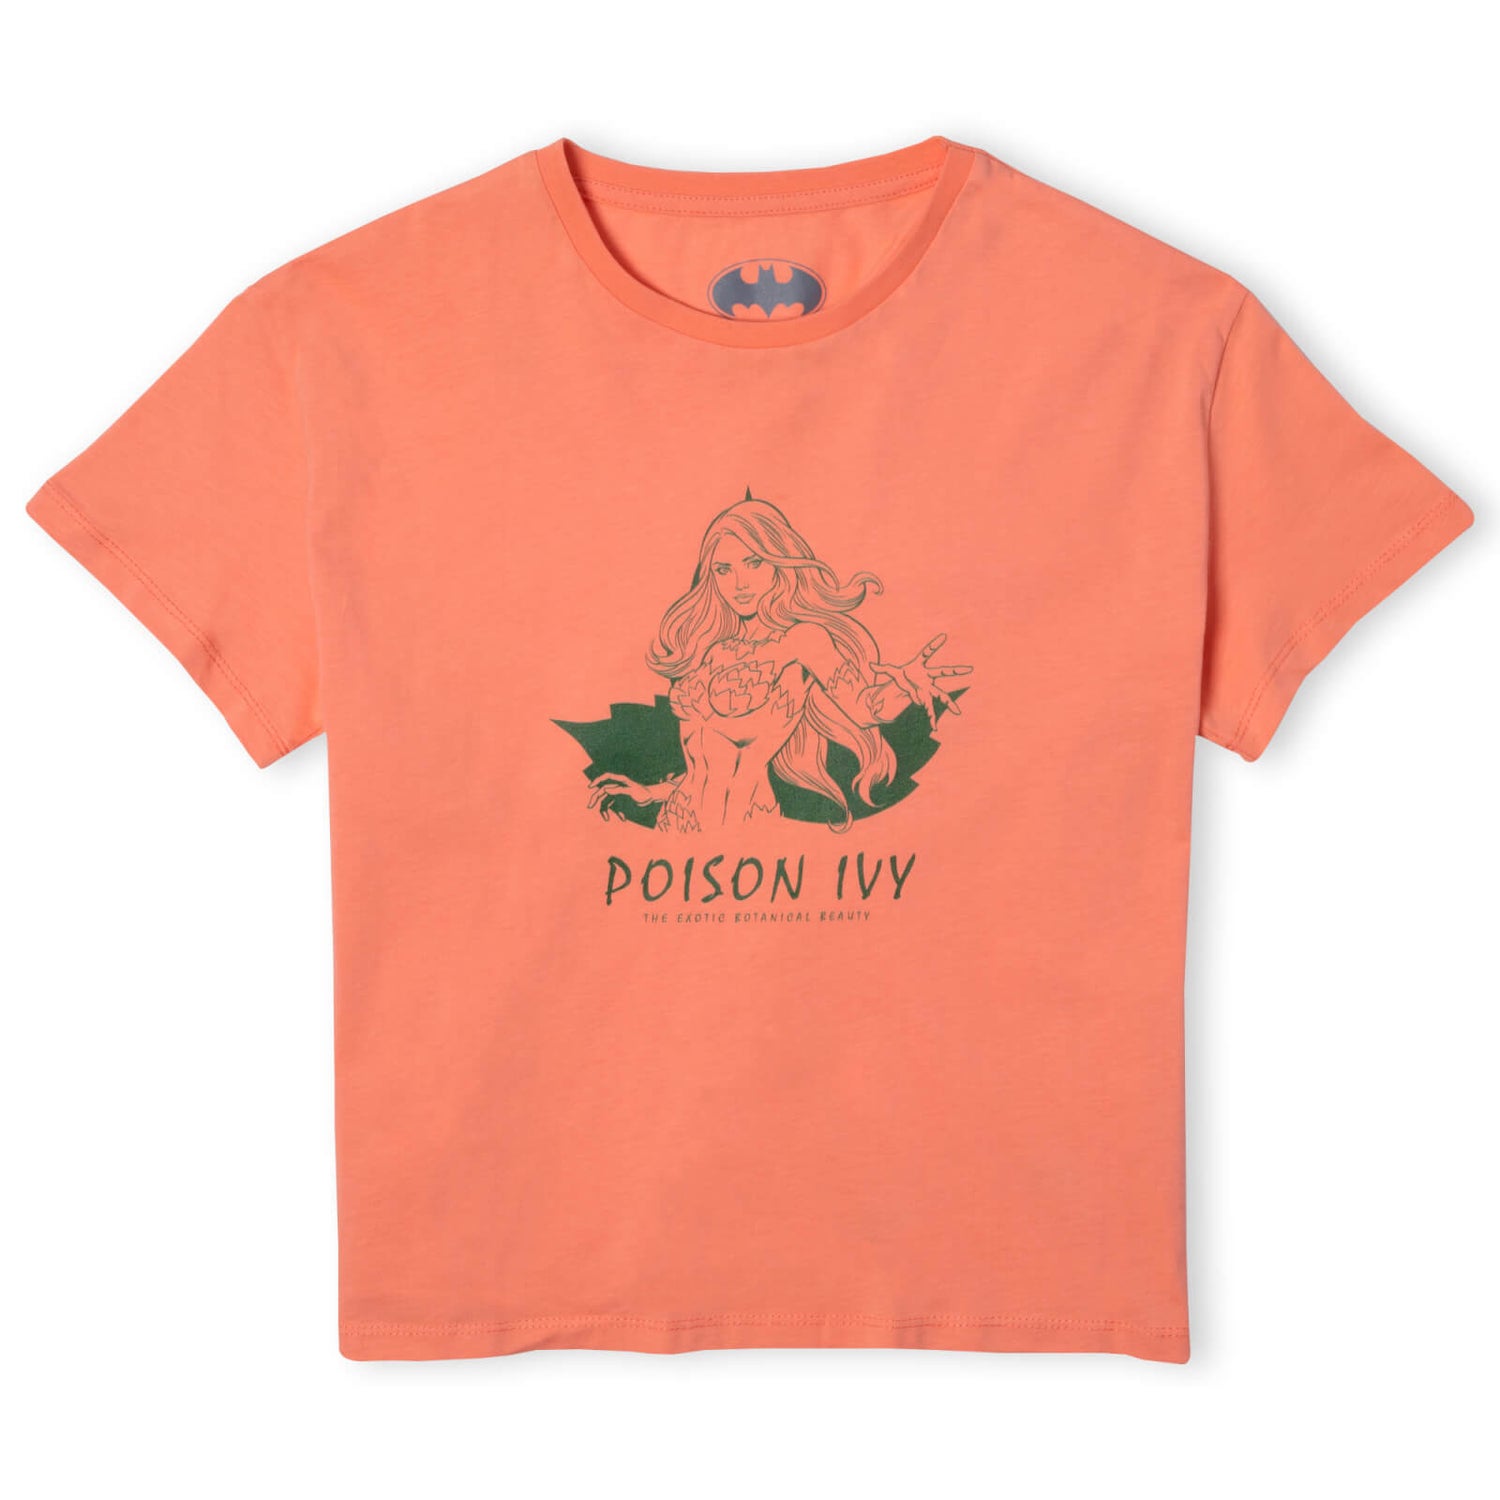 Batman Villains Poison Ivy Damen Cropped T-Shirt - Korallenrot - M